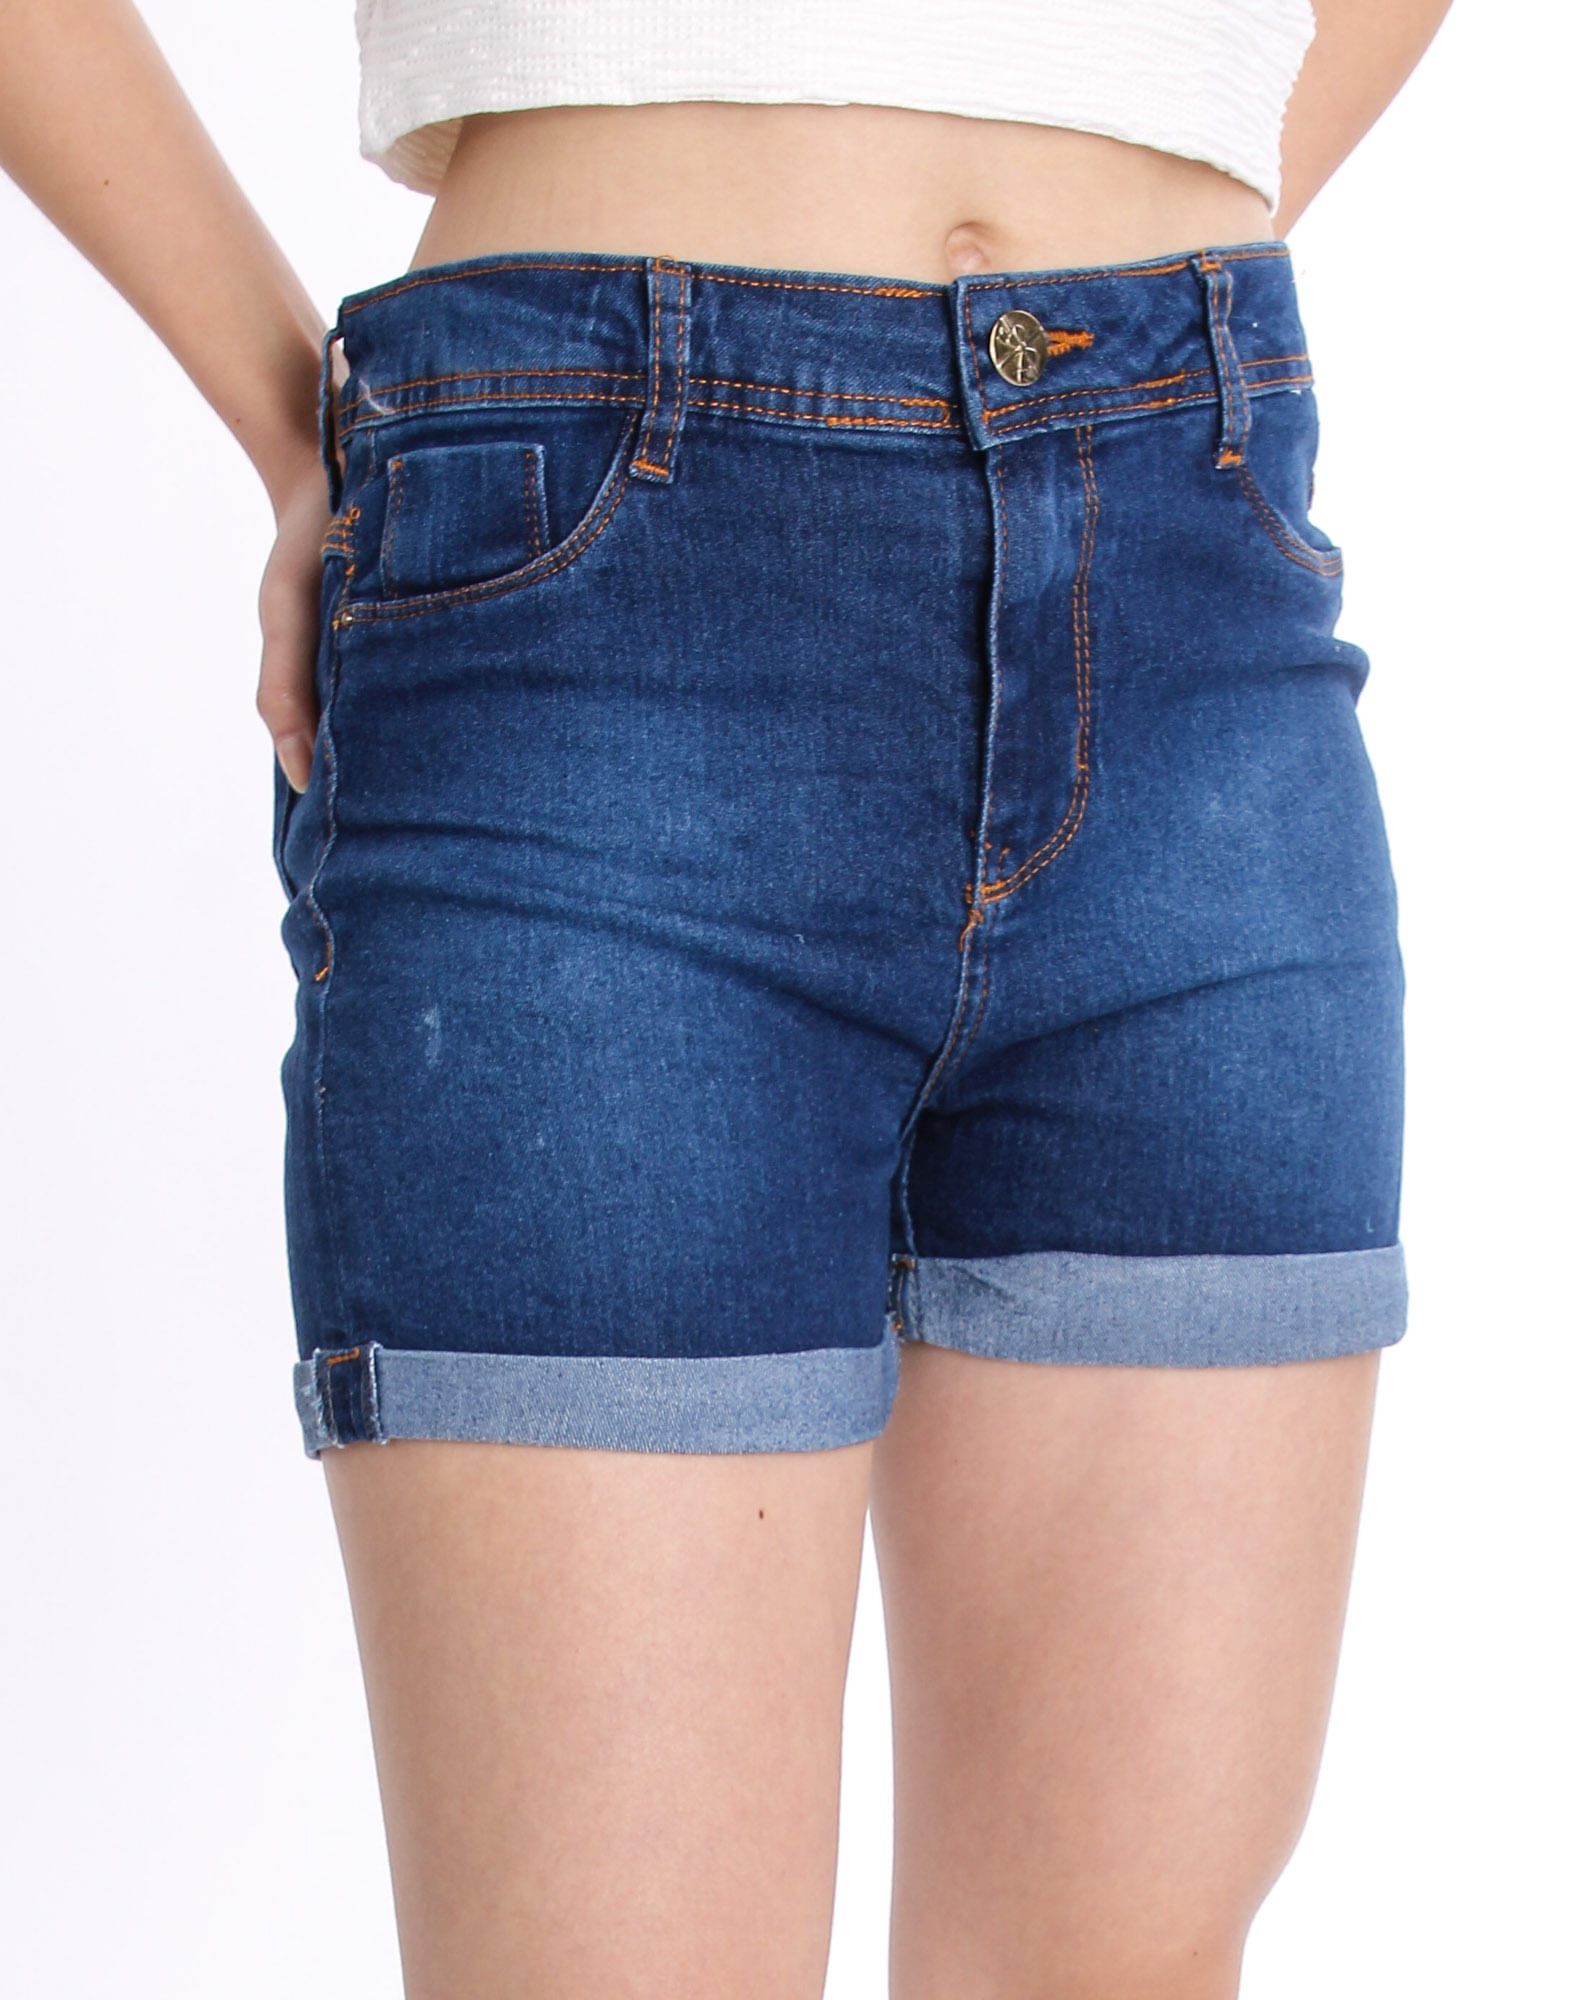 619459019 short jeans feminino curto barra dobrada jeans medio 36 e07